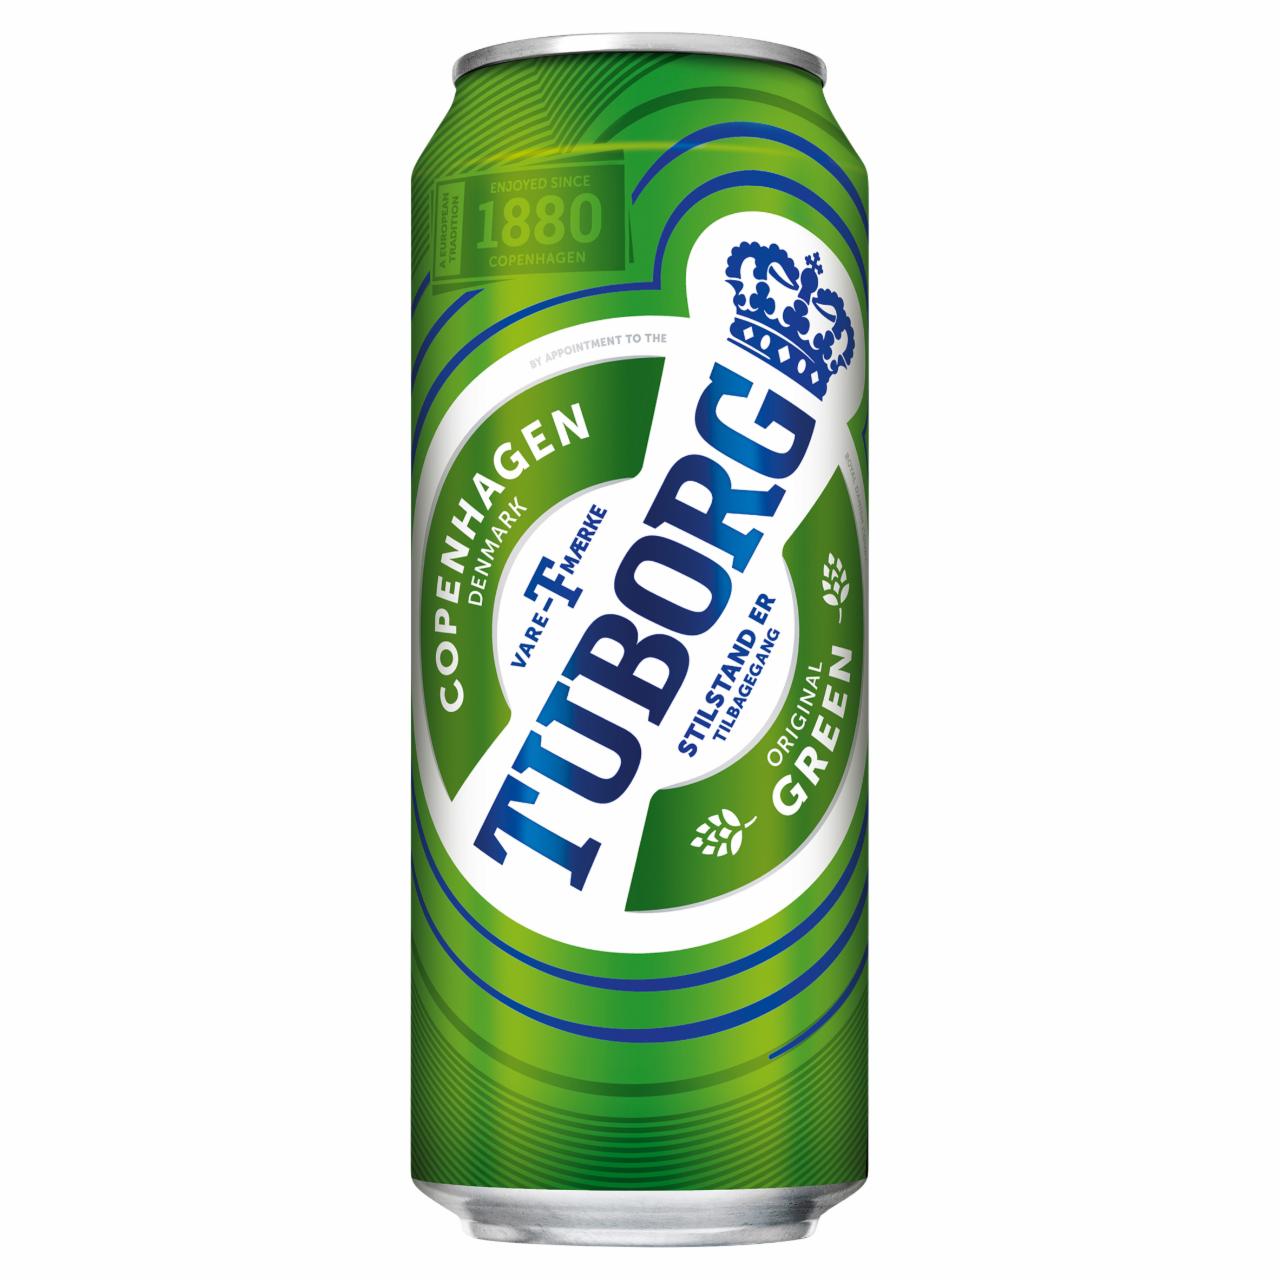 Képek - Tuborg világos sör 4,6% 0,5 l